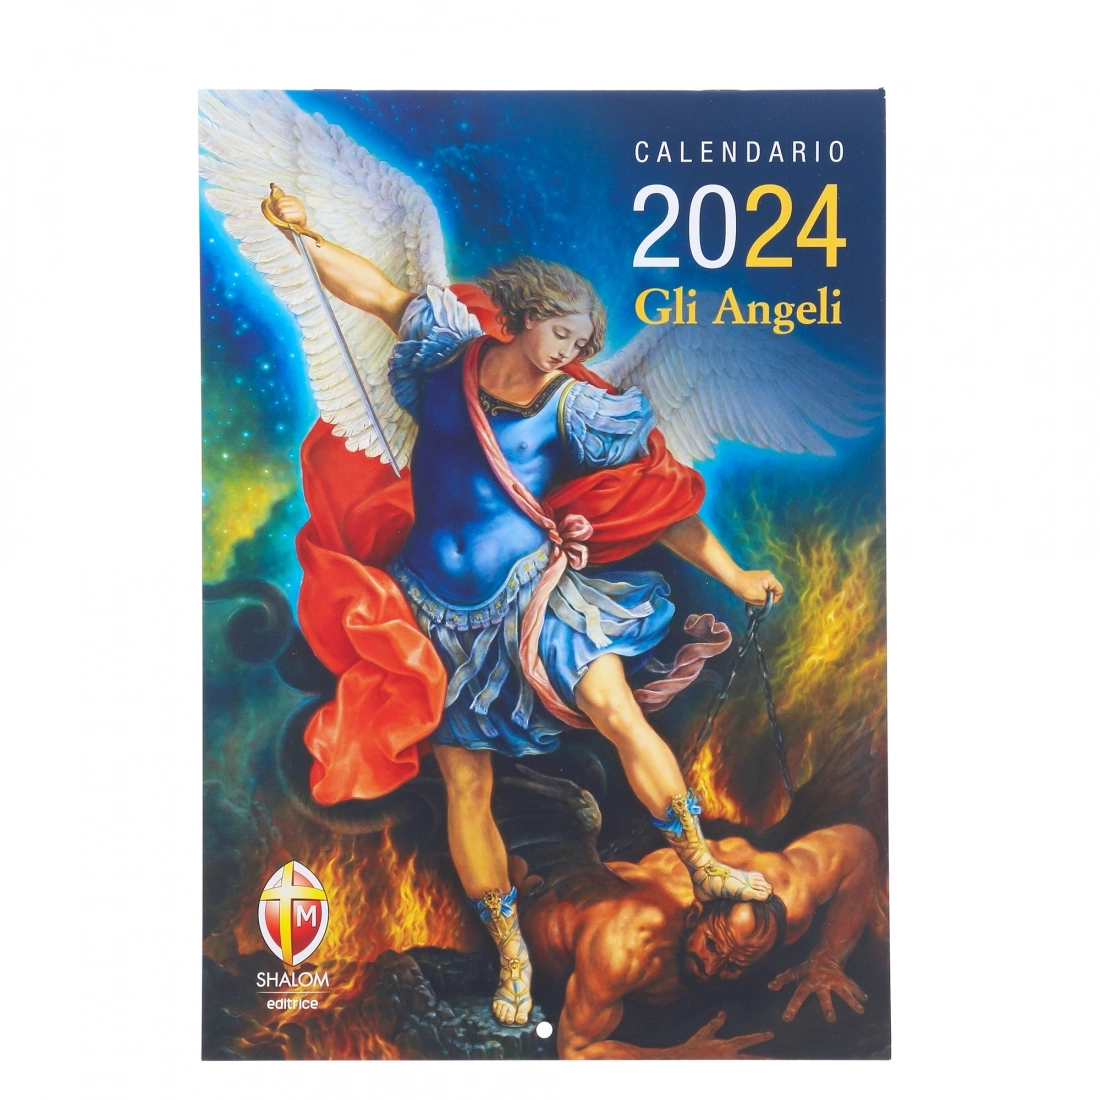 Vendita online calendario da muro 2024 gli angeli - Editrice Shalom